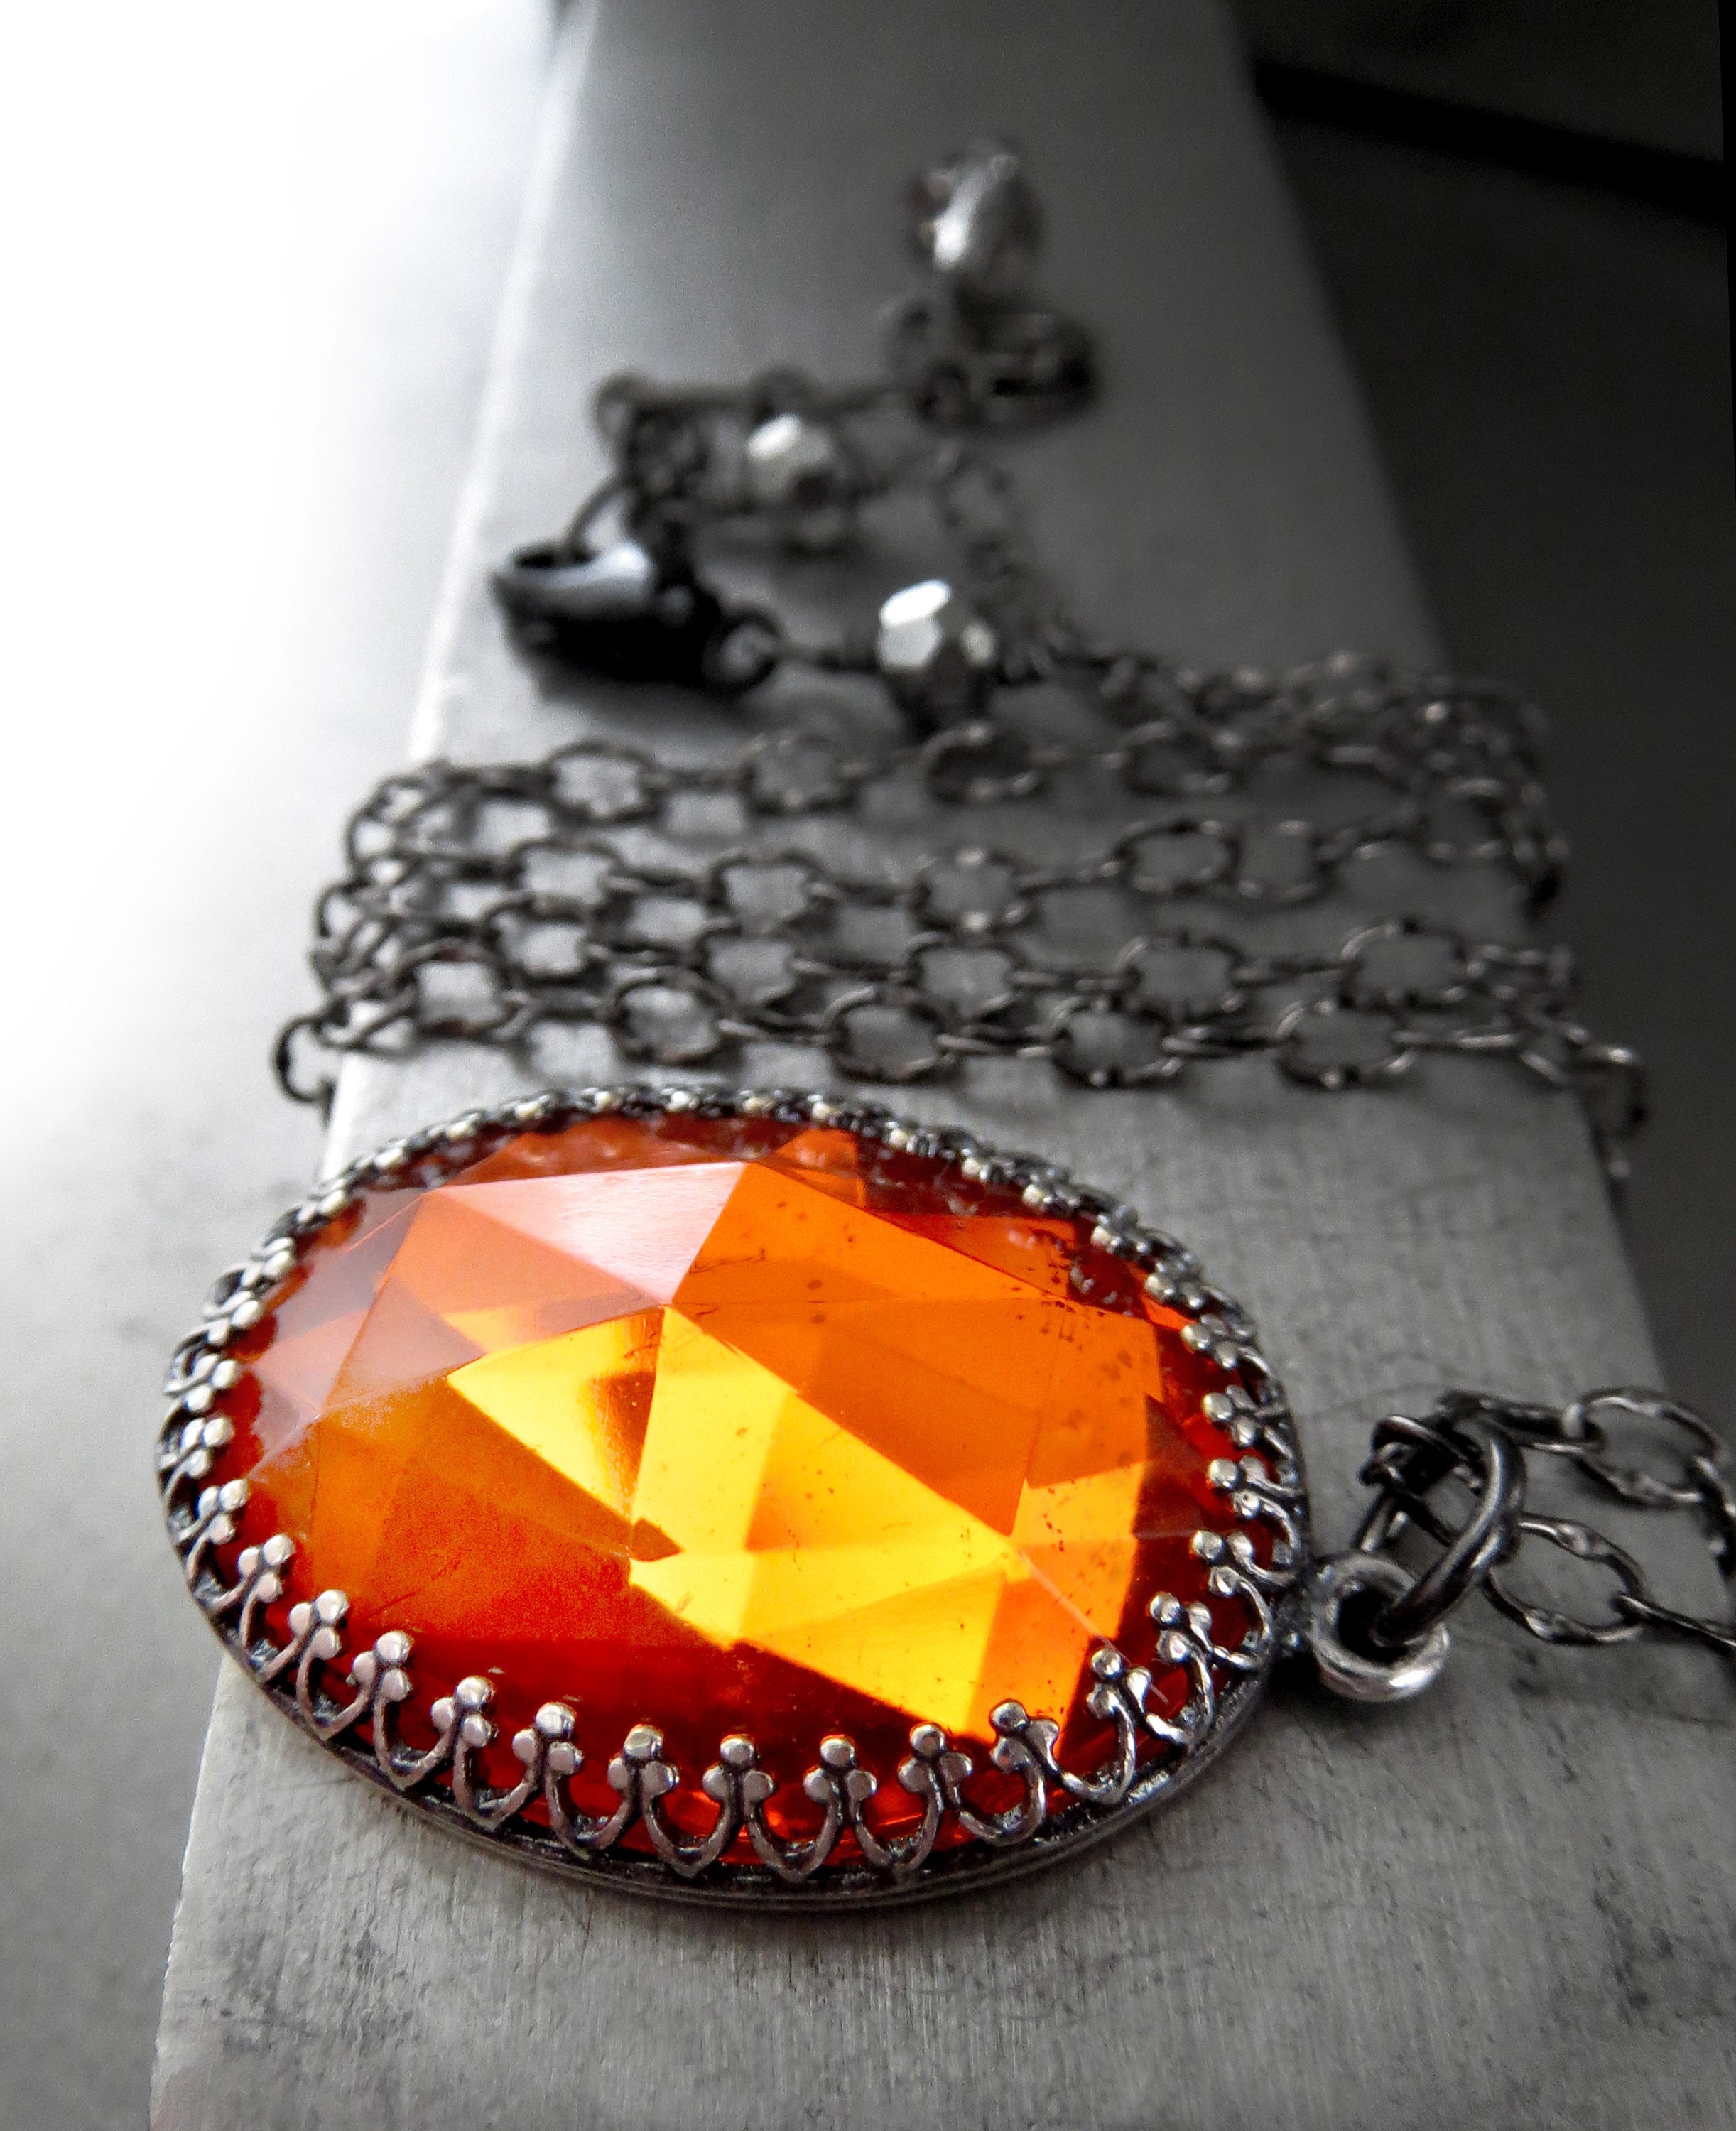 GOTHIC HALLOWEEN - Oval Pendant Necklace with Vintage Pumpkin Orange Glass Cabochon on Black Chain - Goth Wedding, Halloween Wedding Jewelry